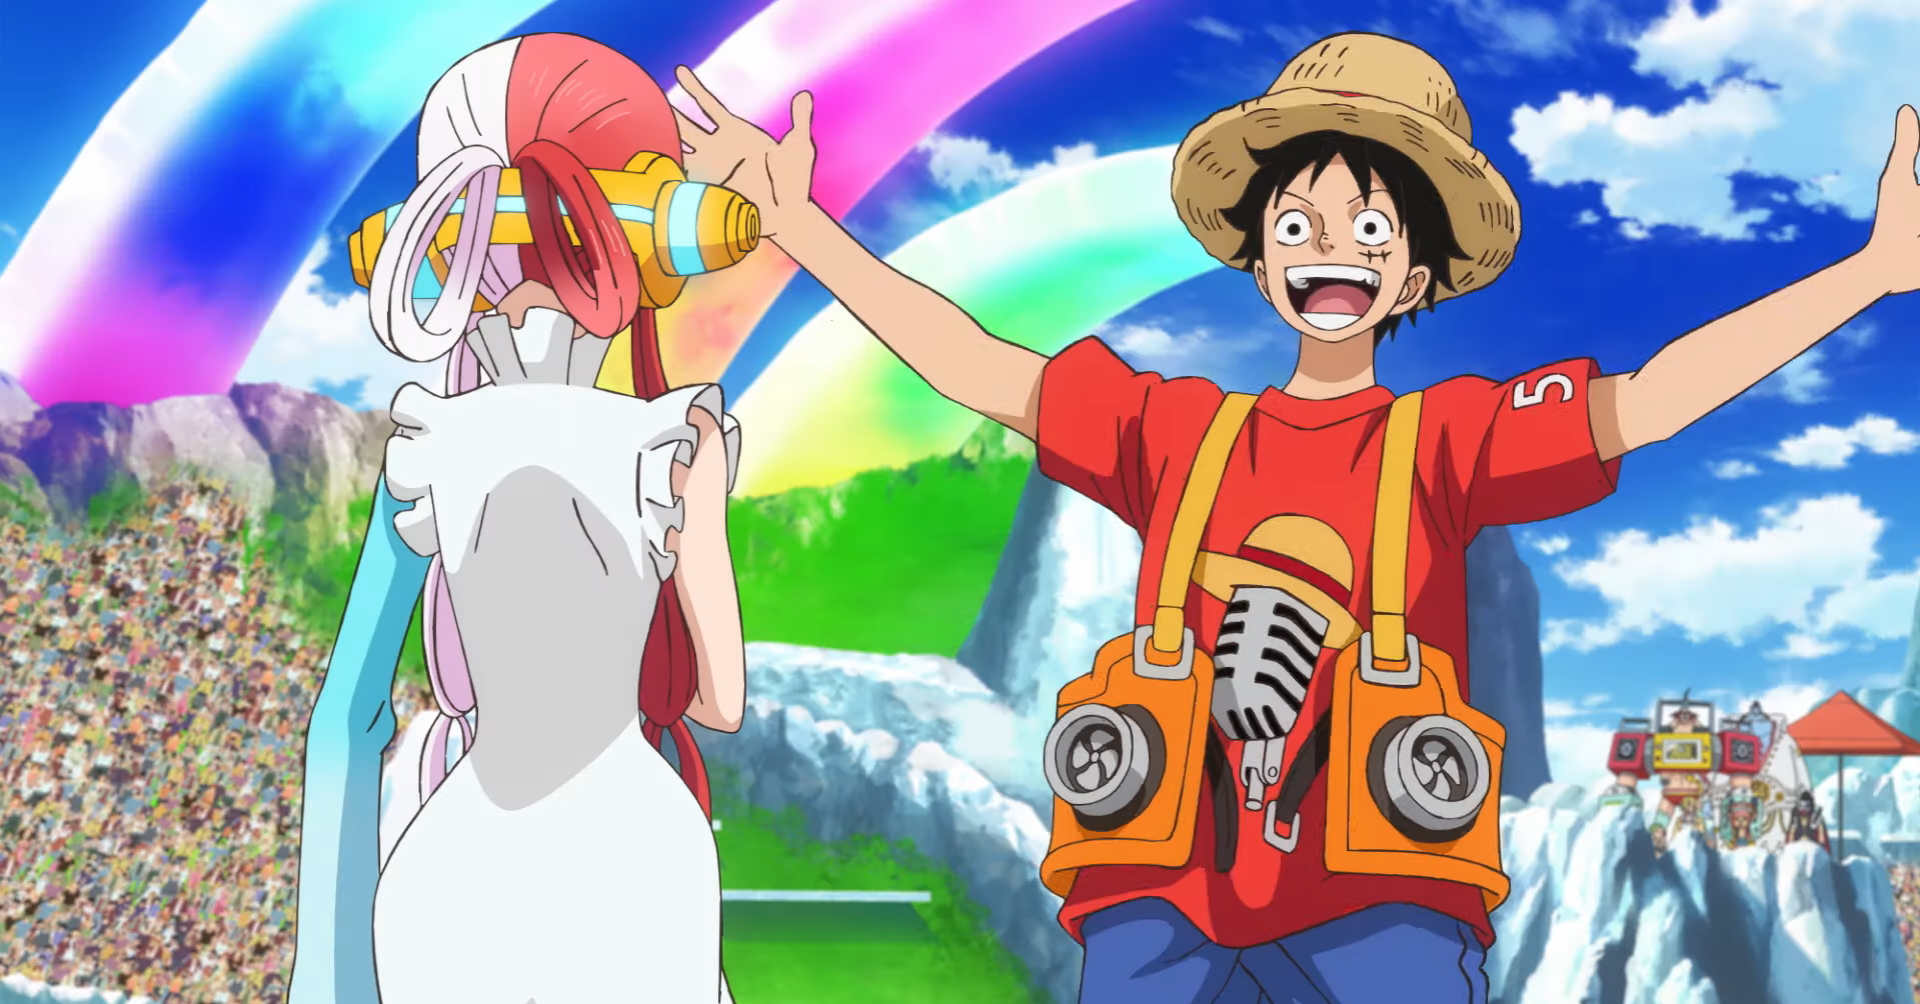 One Piece Episode 1031: Is Luffy attending Uta's Concert?